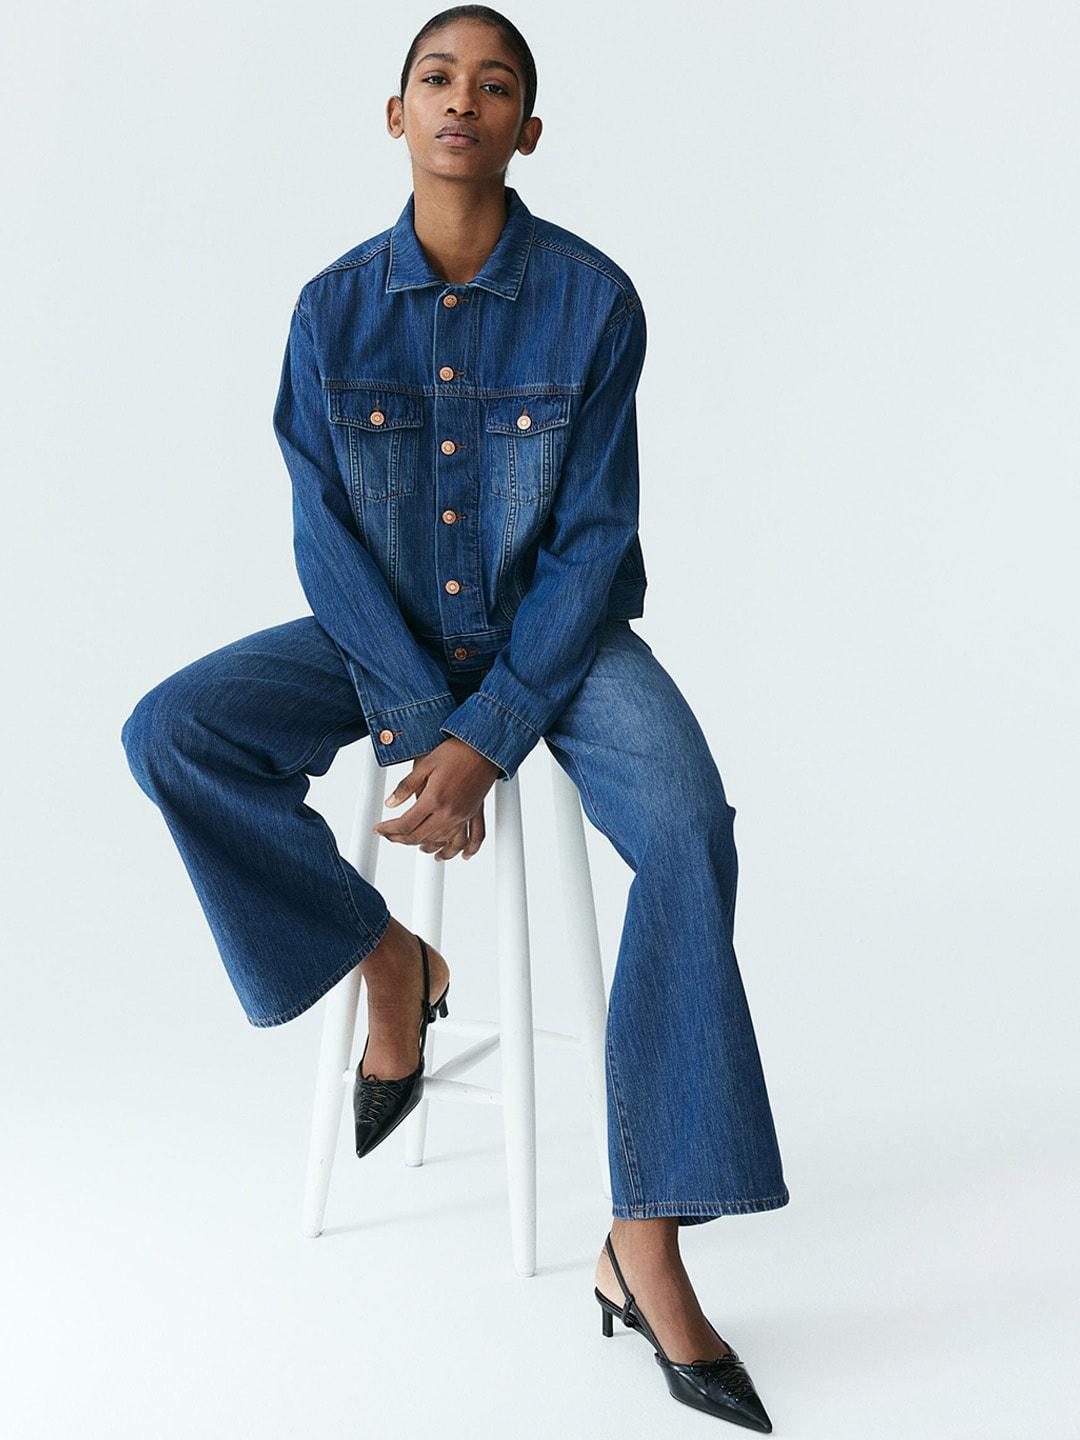 H&M Women Feather Soft Straight Regular Jeans